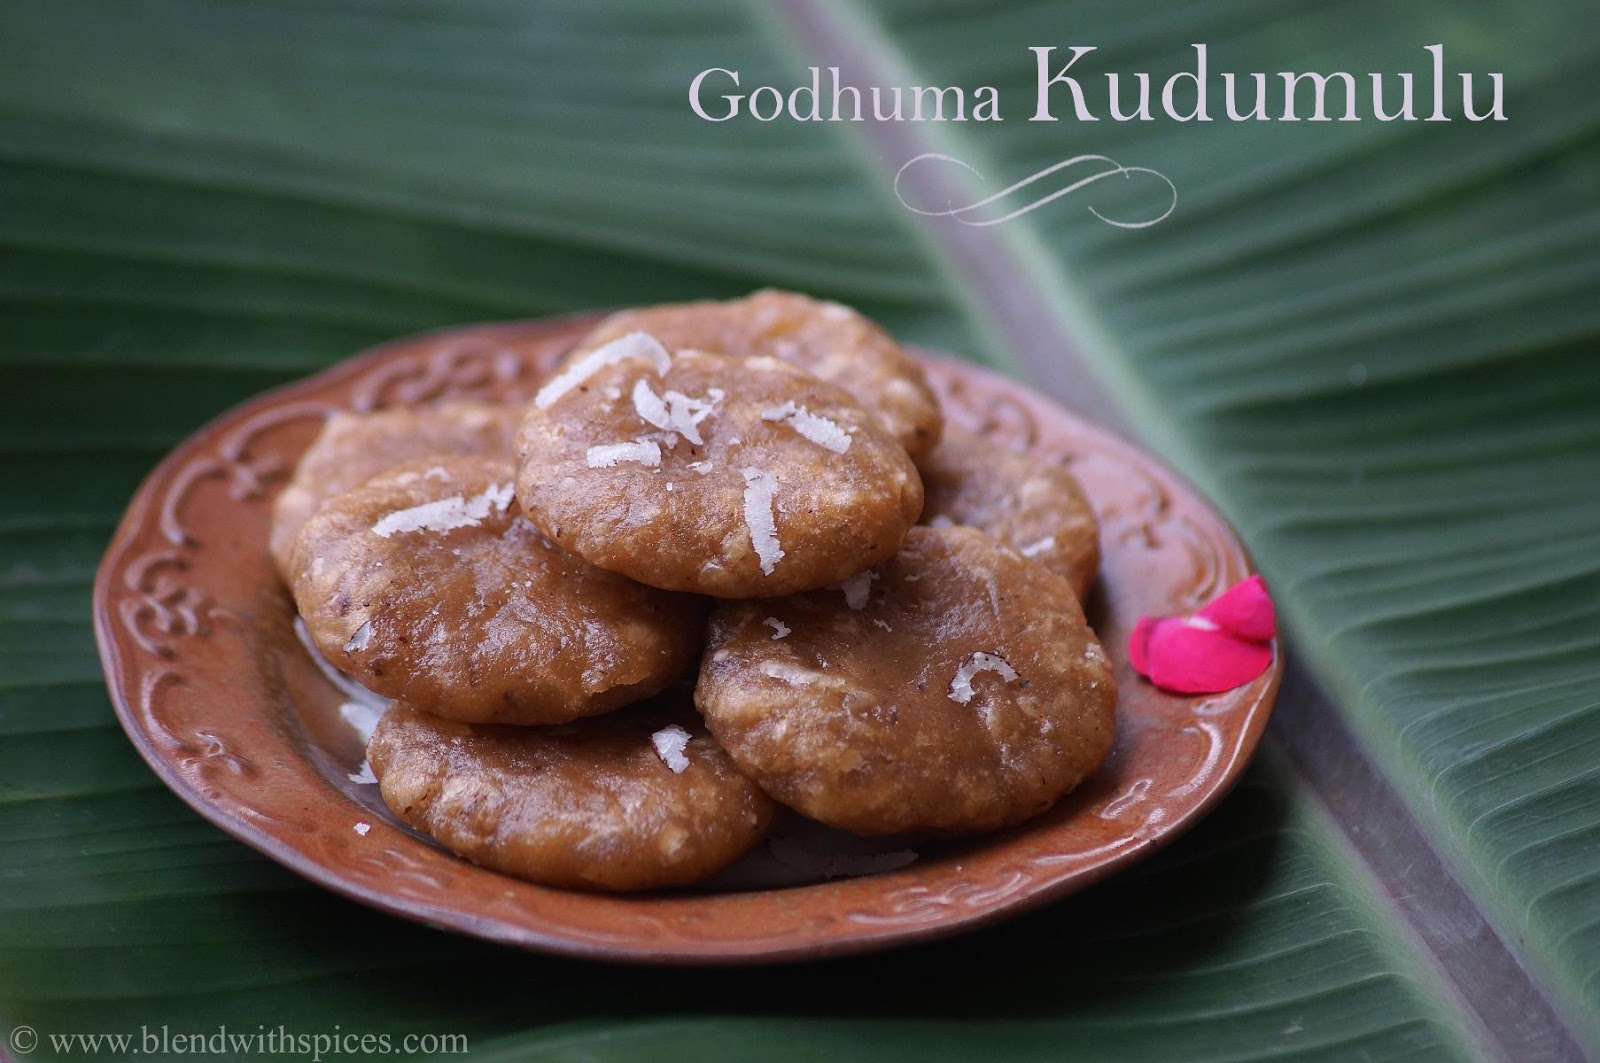 how to make kudumulu with wheat flour, Ganesh chaturthi prasadam recipes, sweet godhuma kudumulu recipe